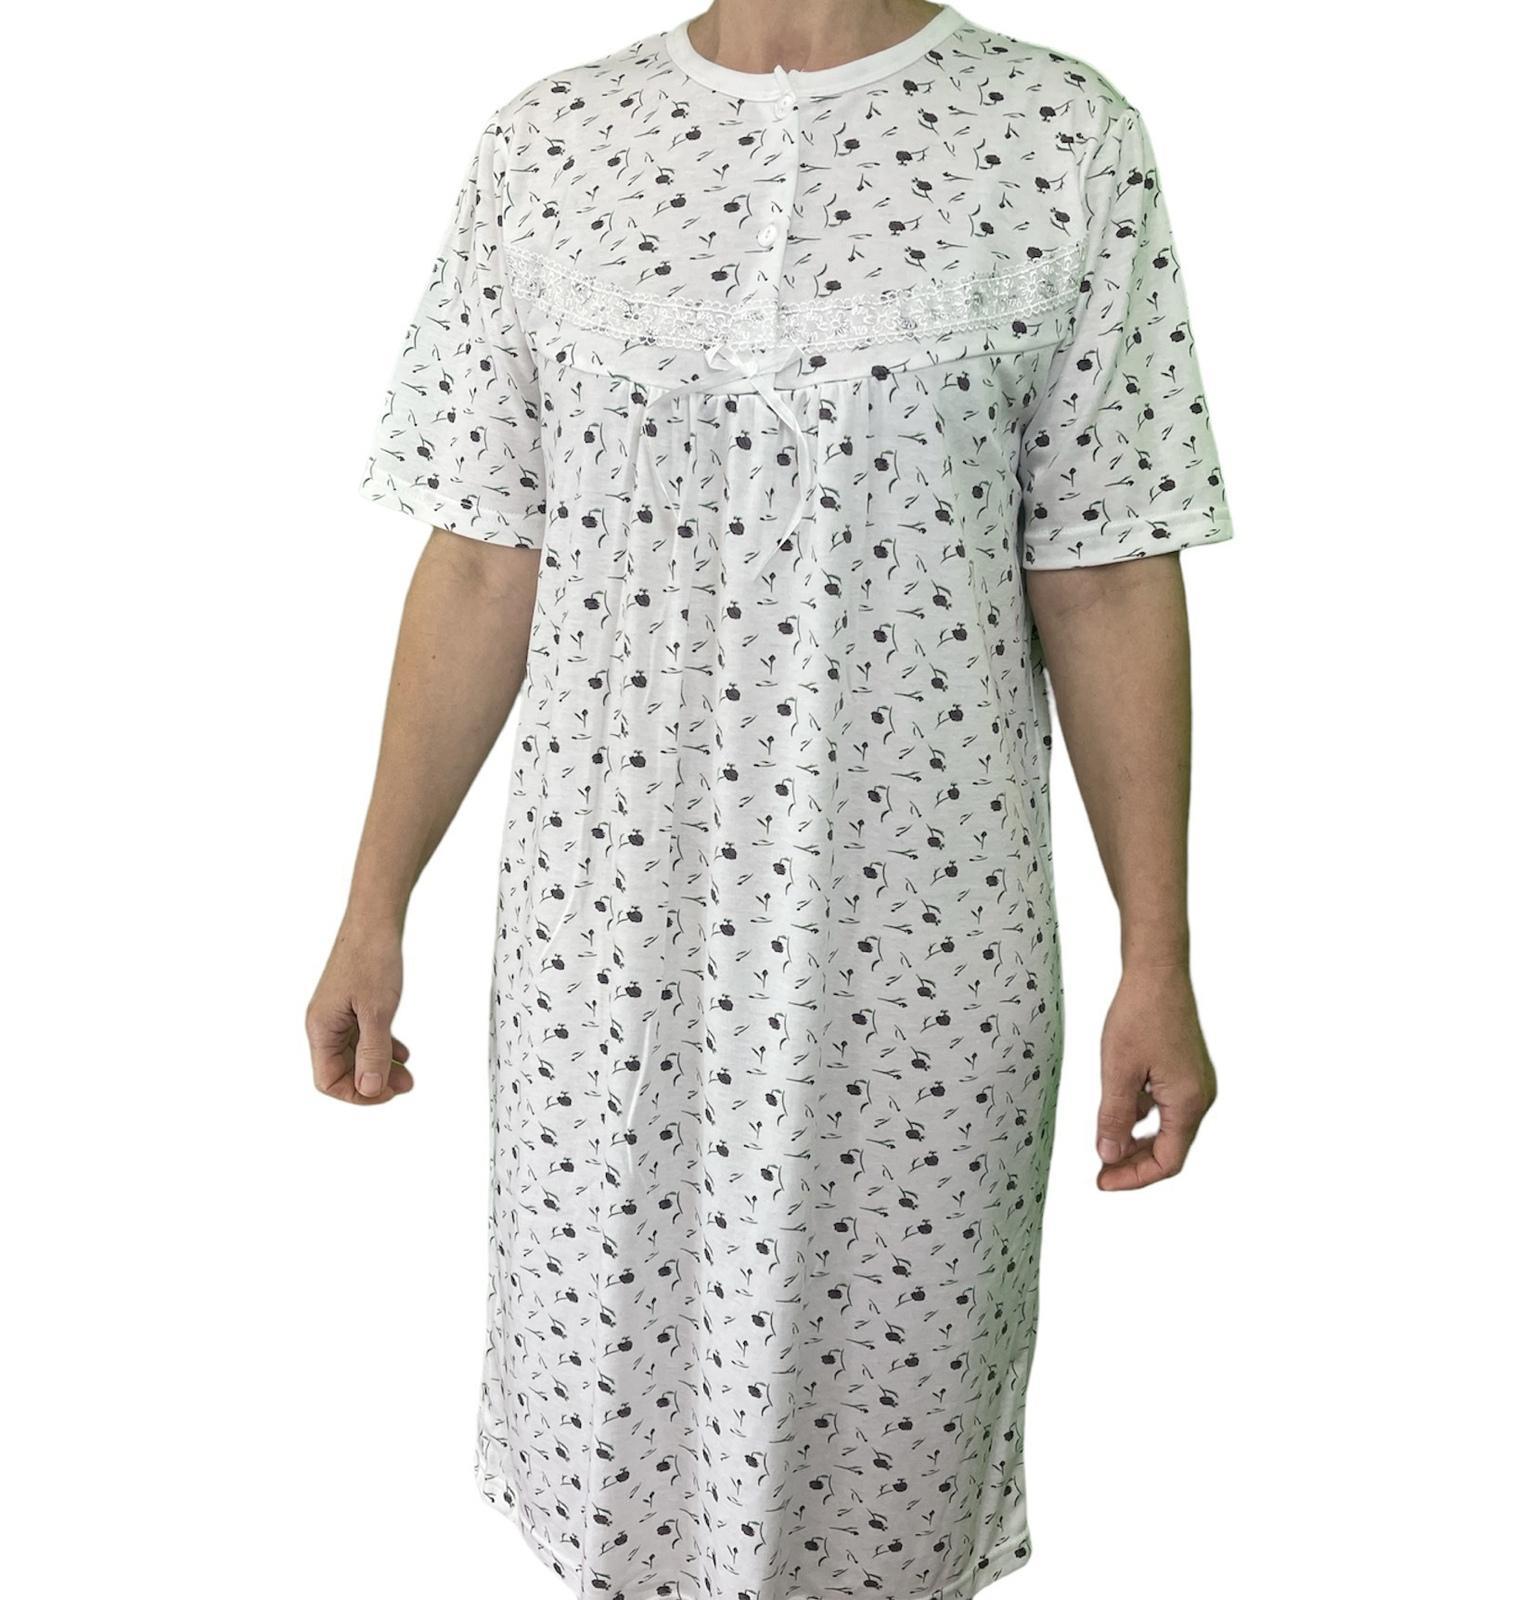 Womens Ladies Cotton Nightie Night Gown Slip Petticoat PJs Sleepwear Dress - White/Purple - 22